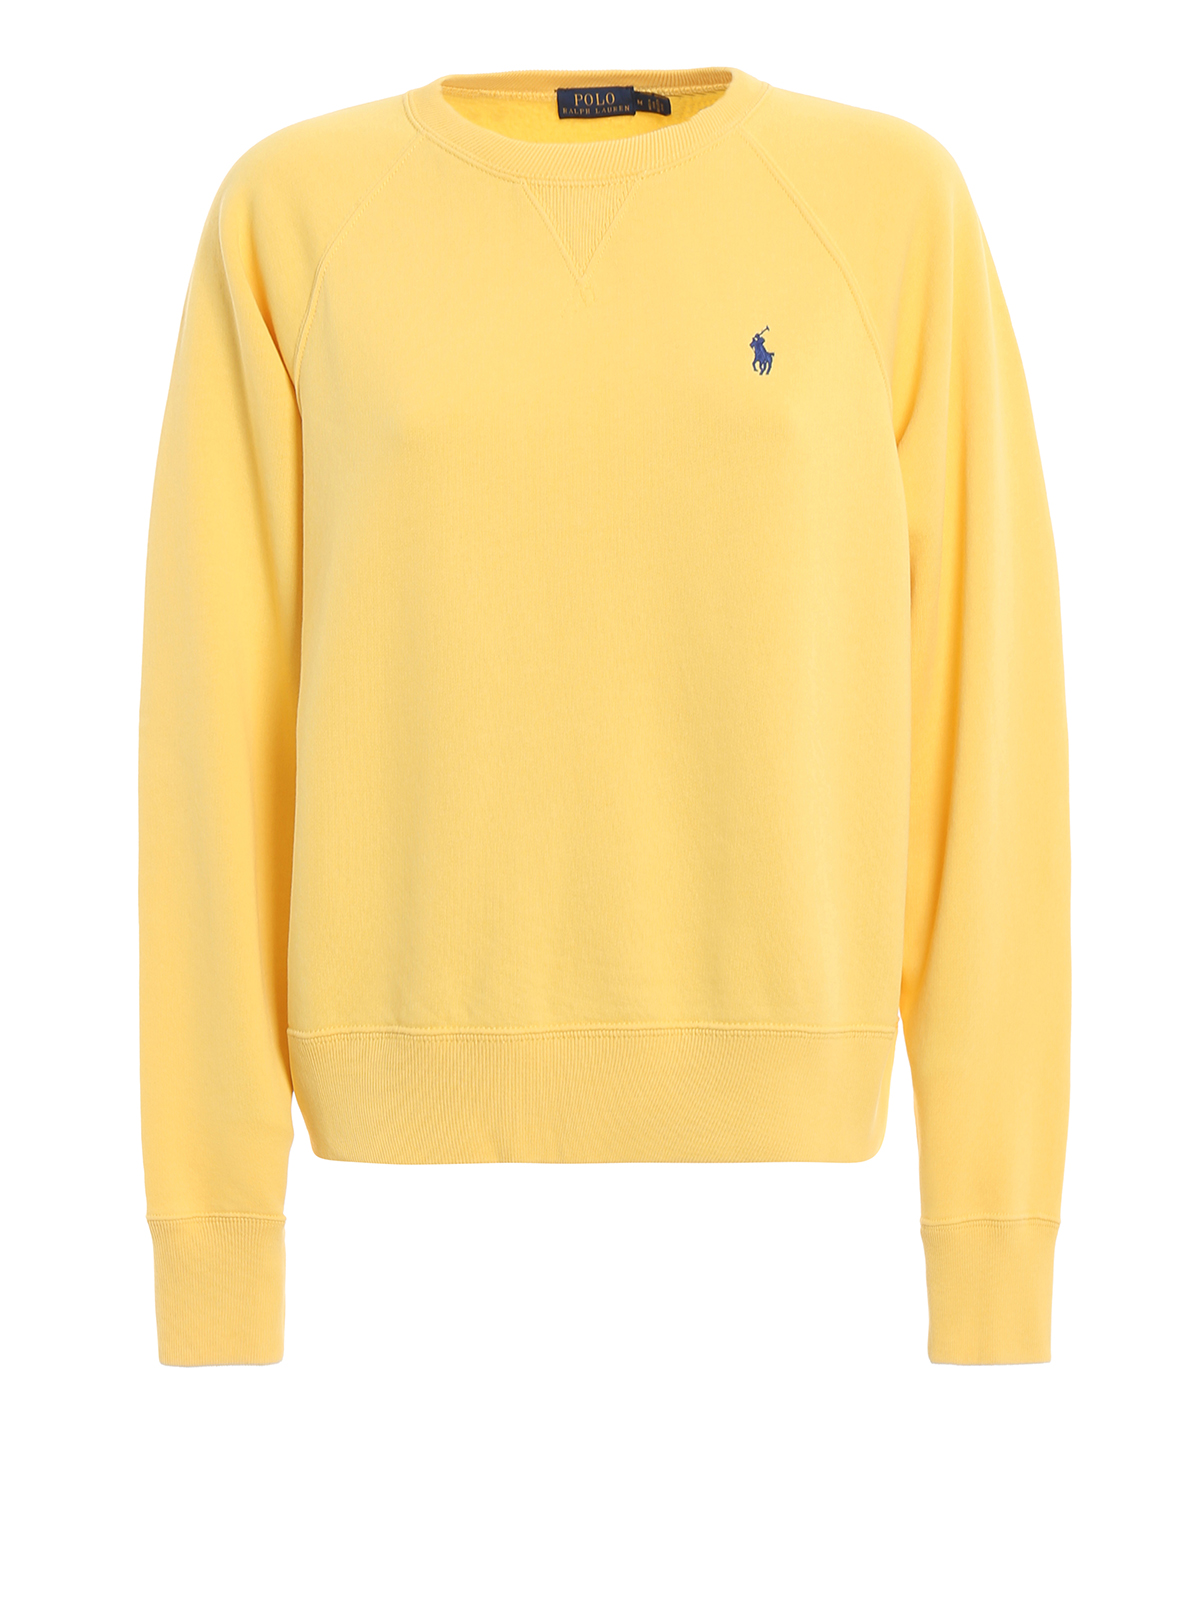 Sweatshirts & Sweaters Polo Ralph Lauren - Crew neck yellow sweatshirt -  211704751008